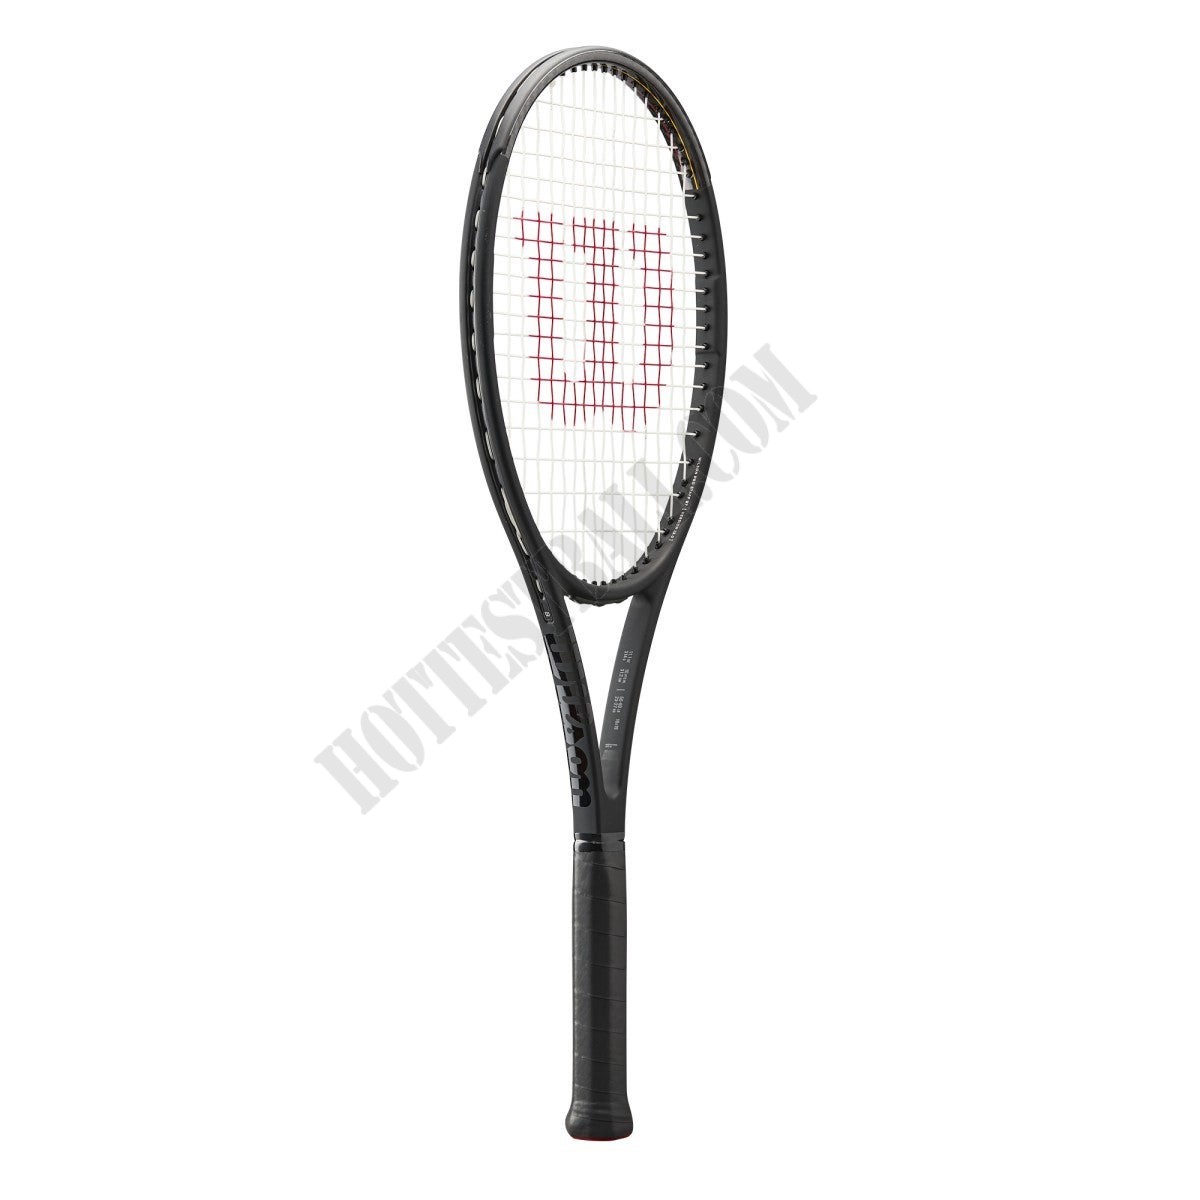 Pro Staff 97 v13 Tennis Racket - Wilson Discount Store - -0